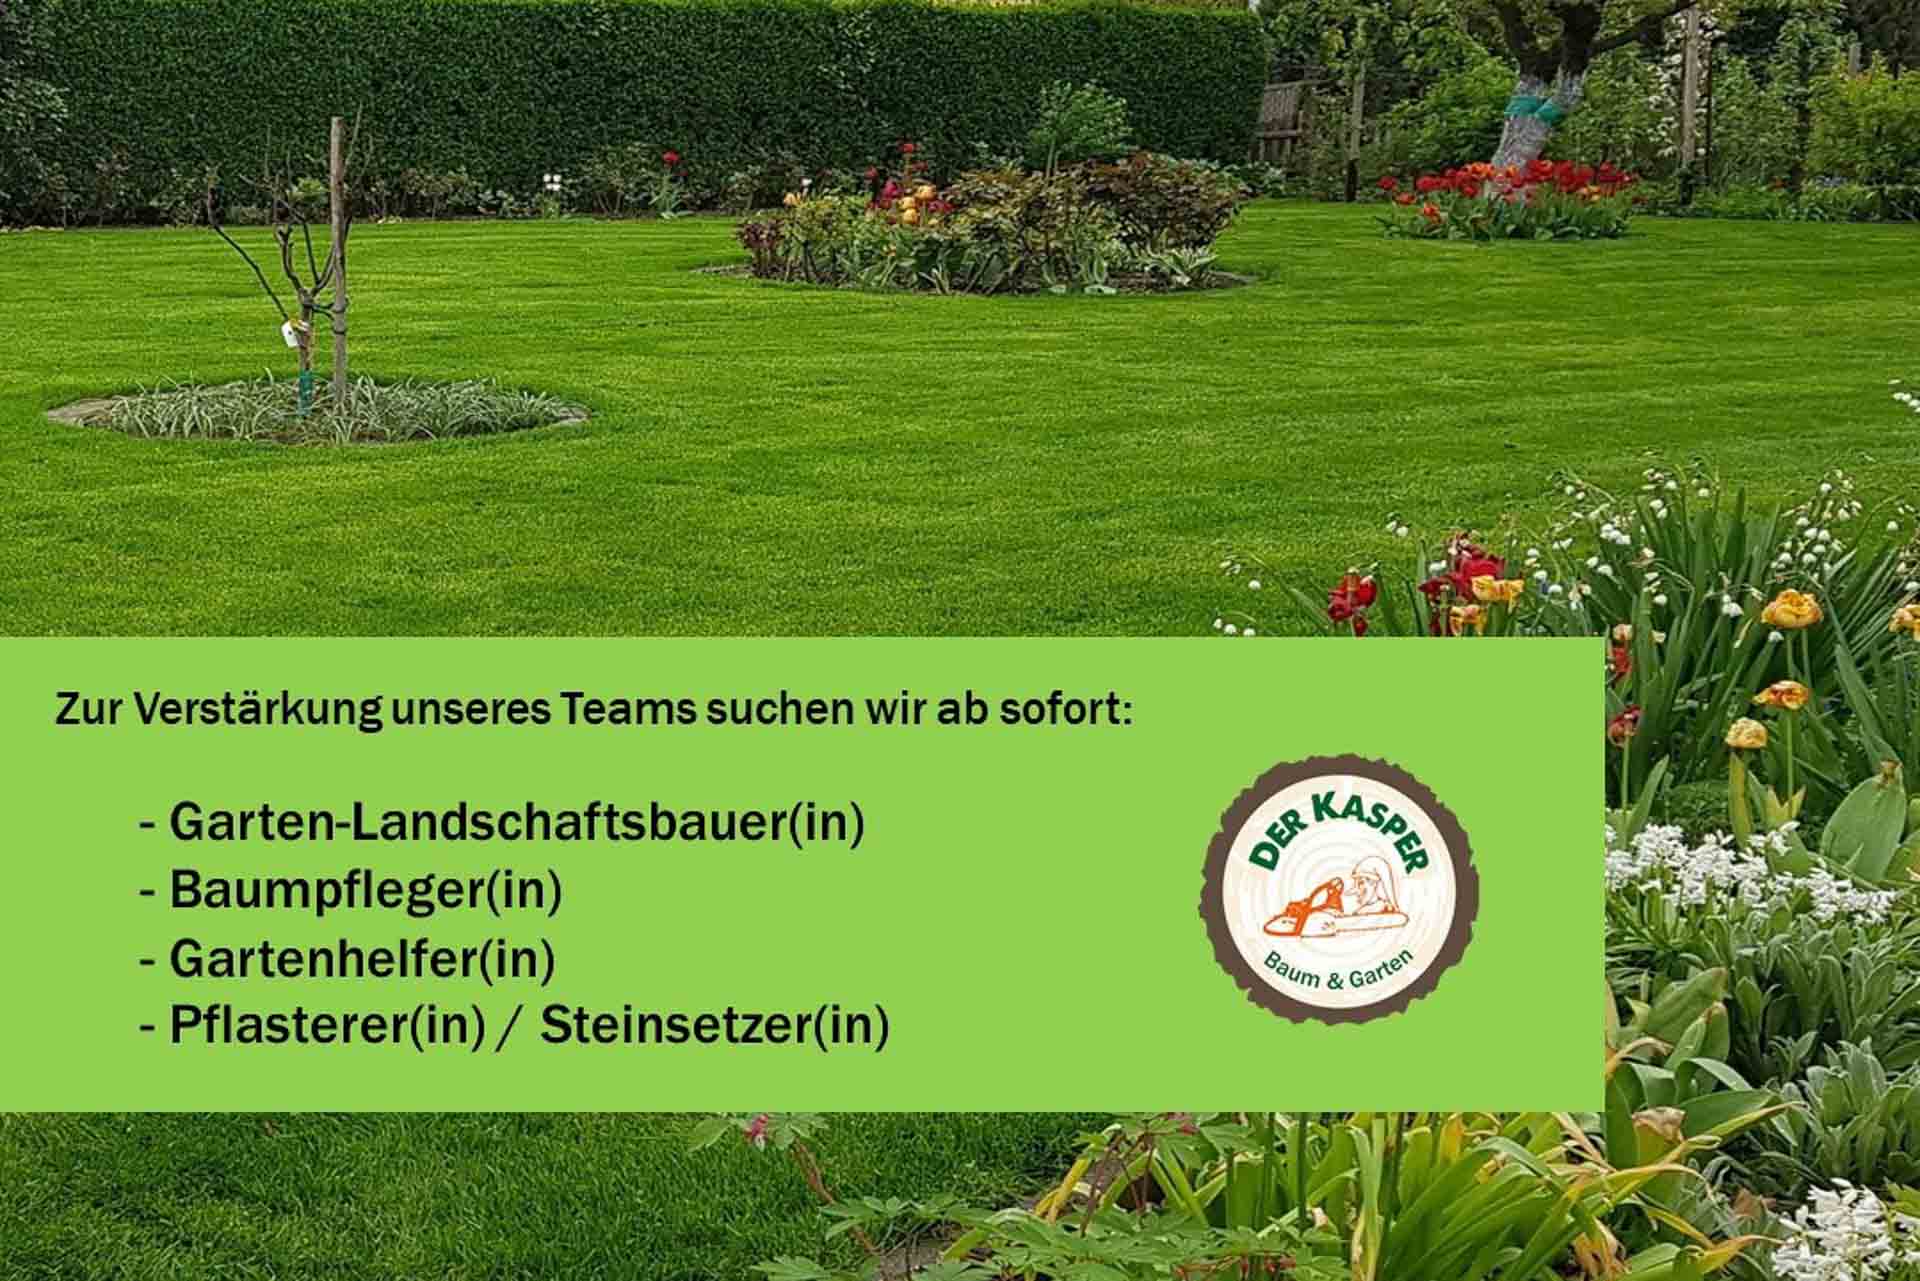 Der Kasper - Baum & Garten in Bernau - Teamverstärkung (m/w/d) gesucht